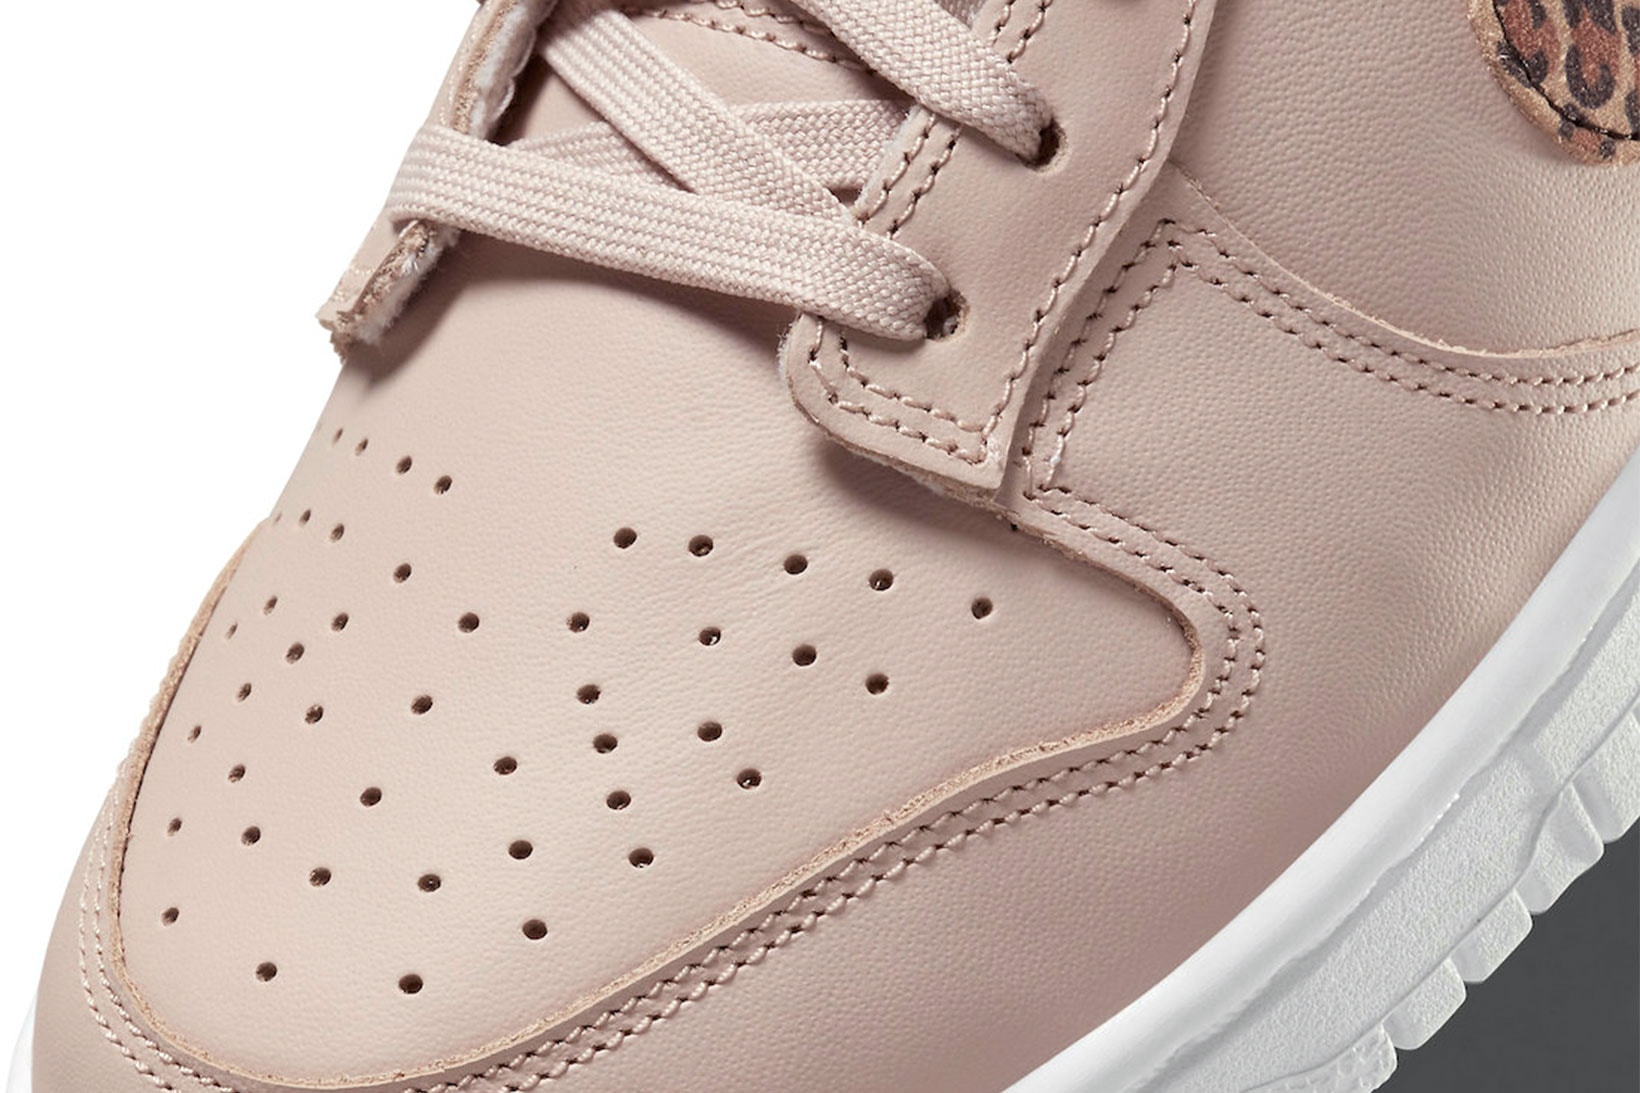 Nike Dunk Low "Animal Print" dusty pink toebox close up